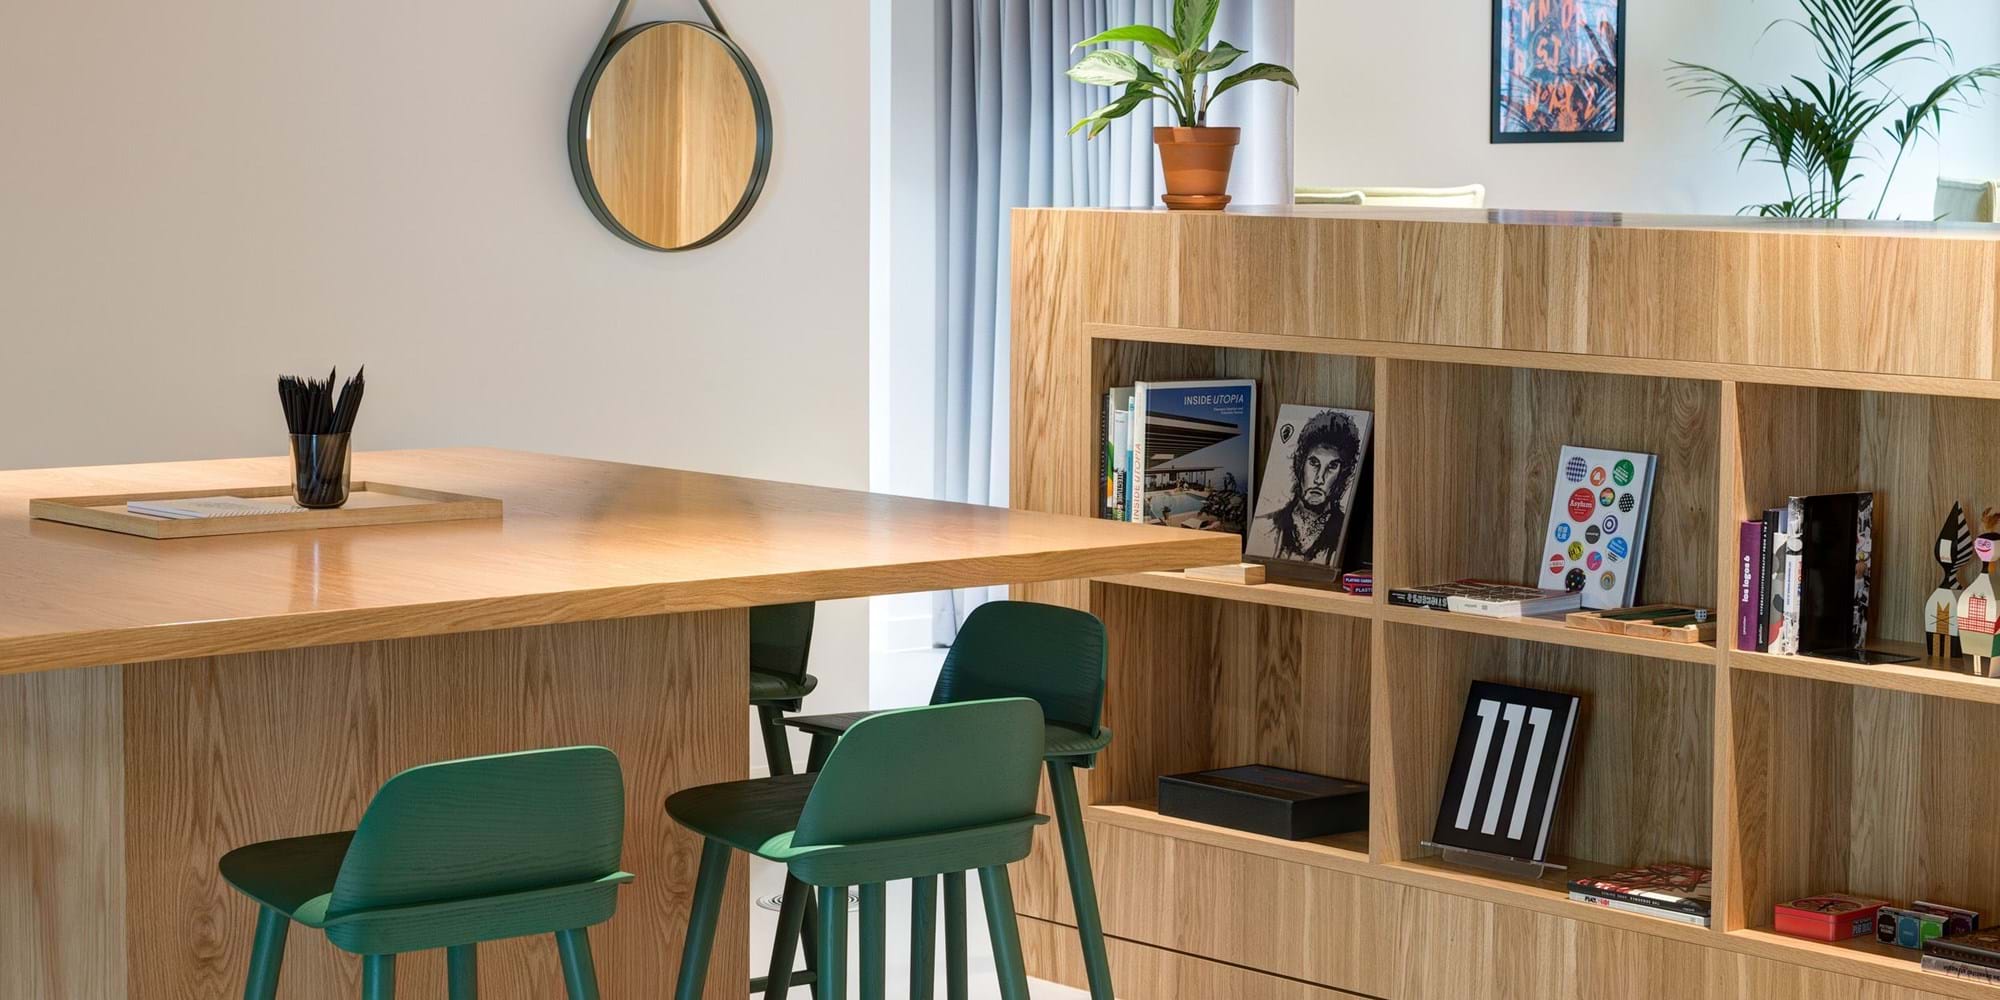 Modus Workspace office design, fit out and refurbishment - Spaces - Uxbridge - Spaces Uxbridge 07 highres sRGB.jpg